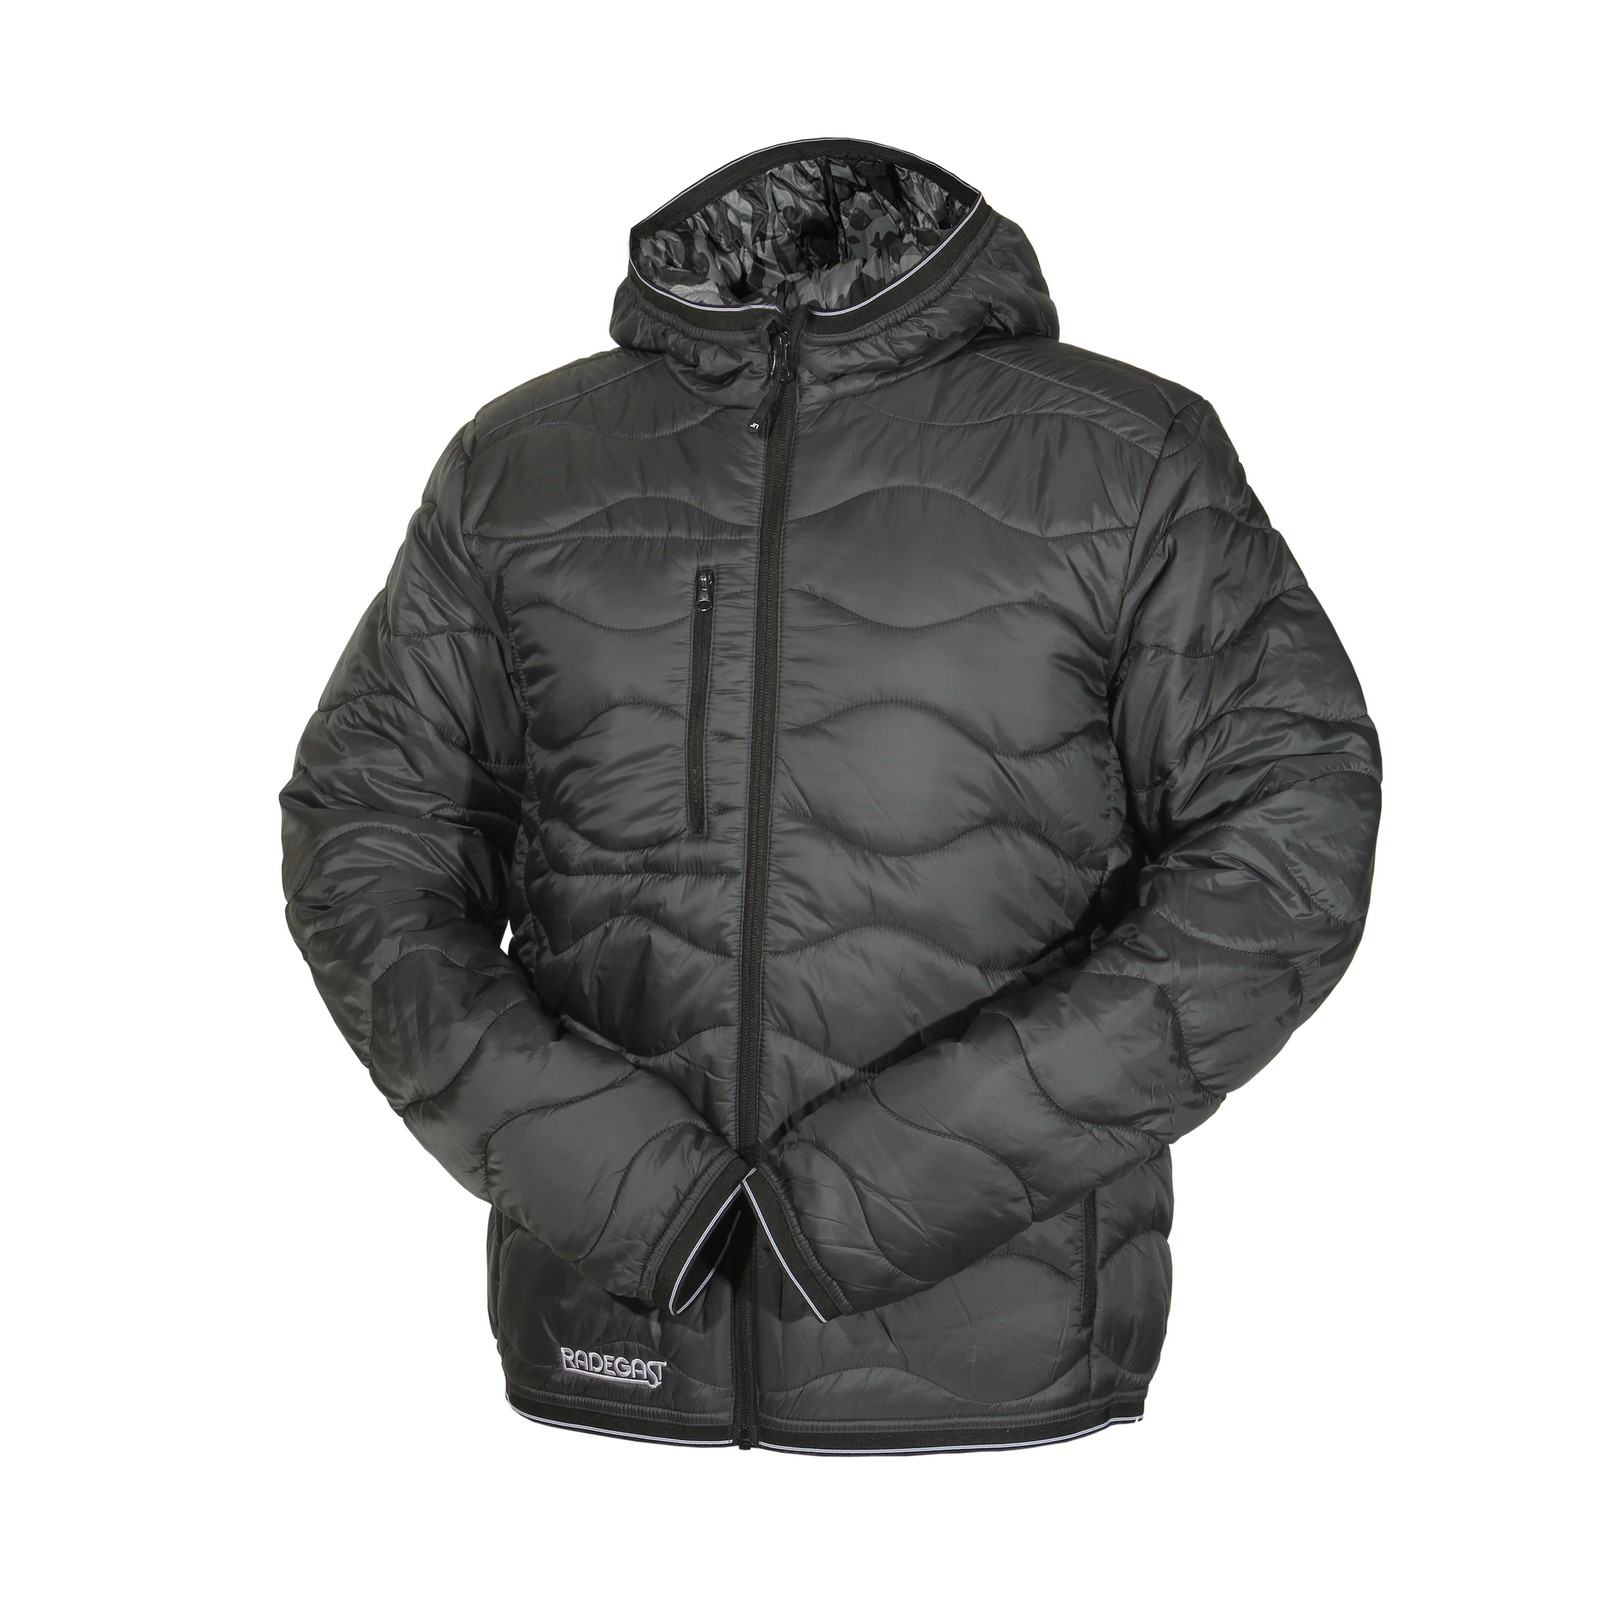 Men’s Radegast winter jacket